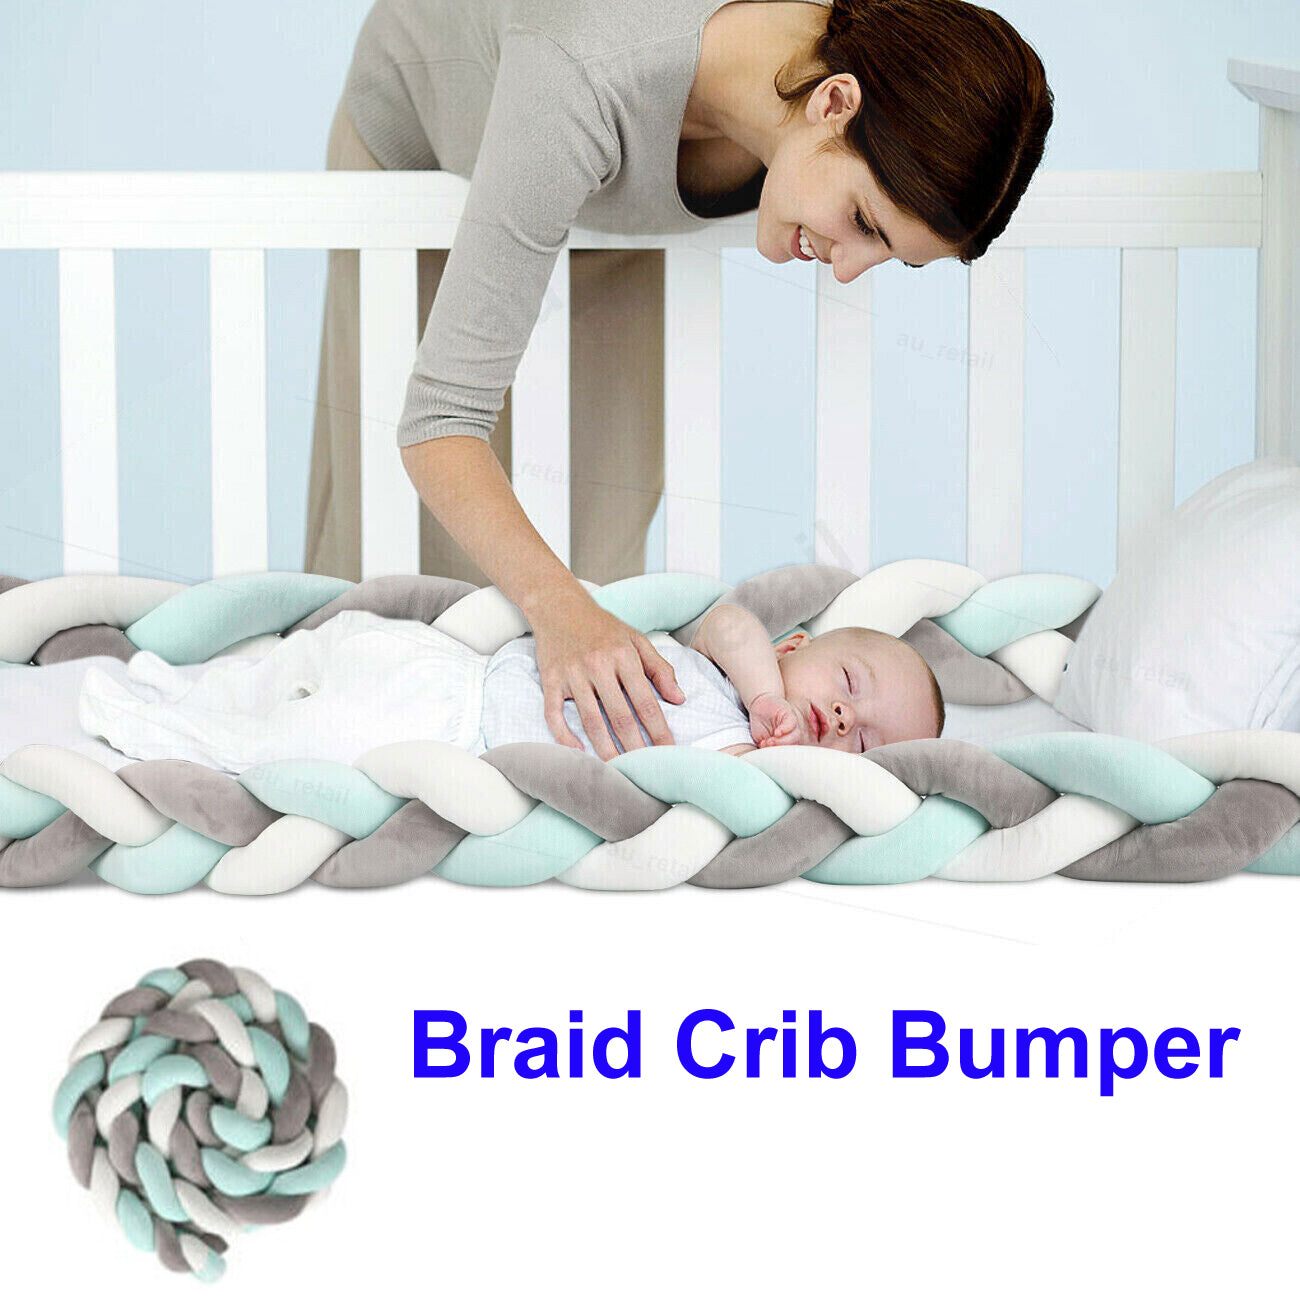 4M Kid Cot Bumper Braid Pillow Nursery Newborn Crib Bed Padded Protector Decor Gray+White+Green - SILBERSHELL